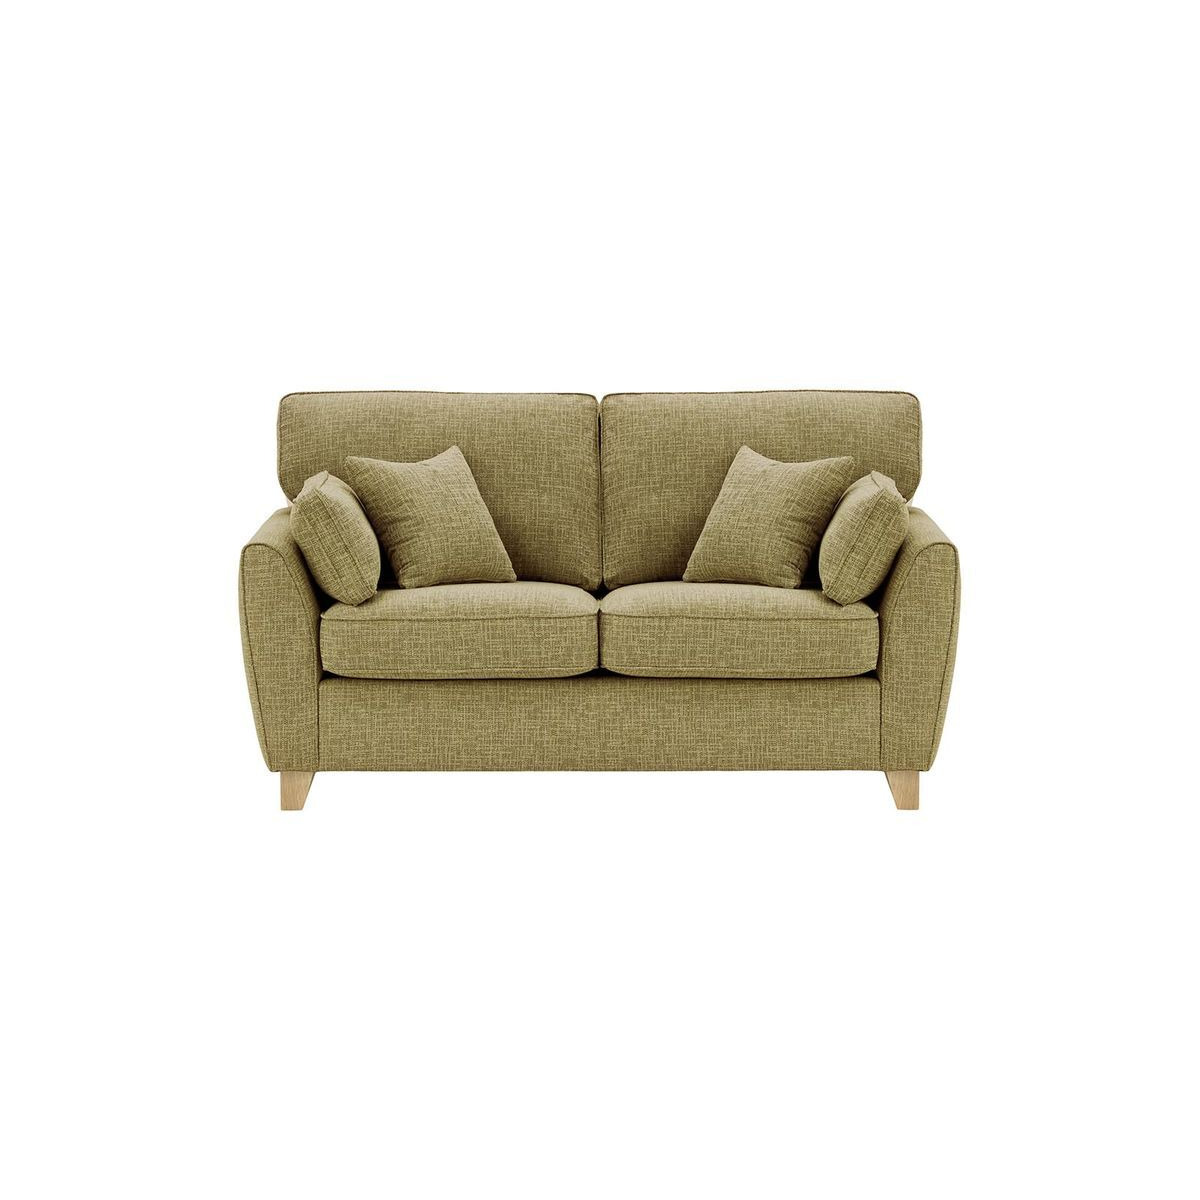 James 2 Seater Sofa, brown, Leg colour: wax black - image 1